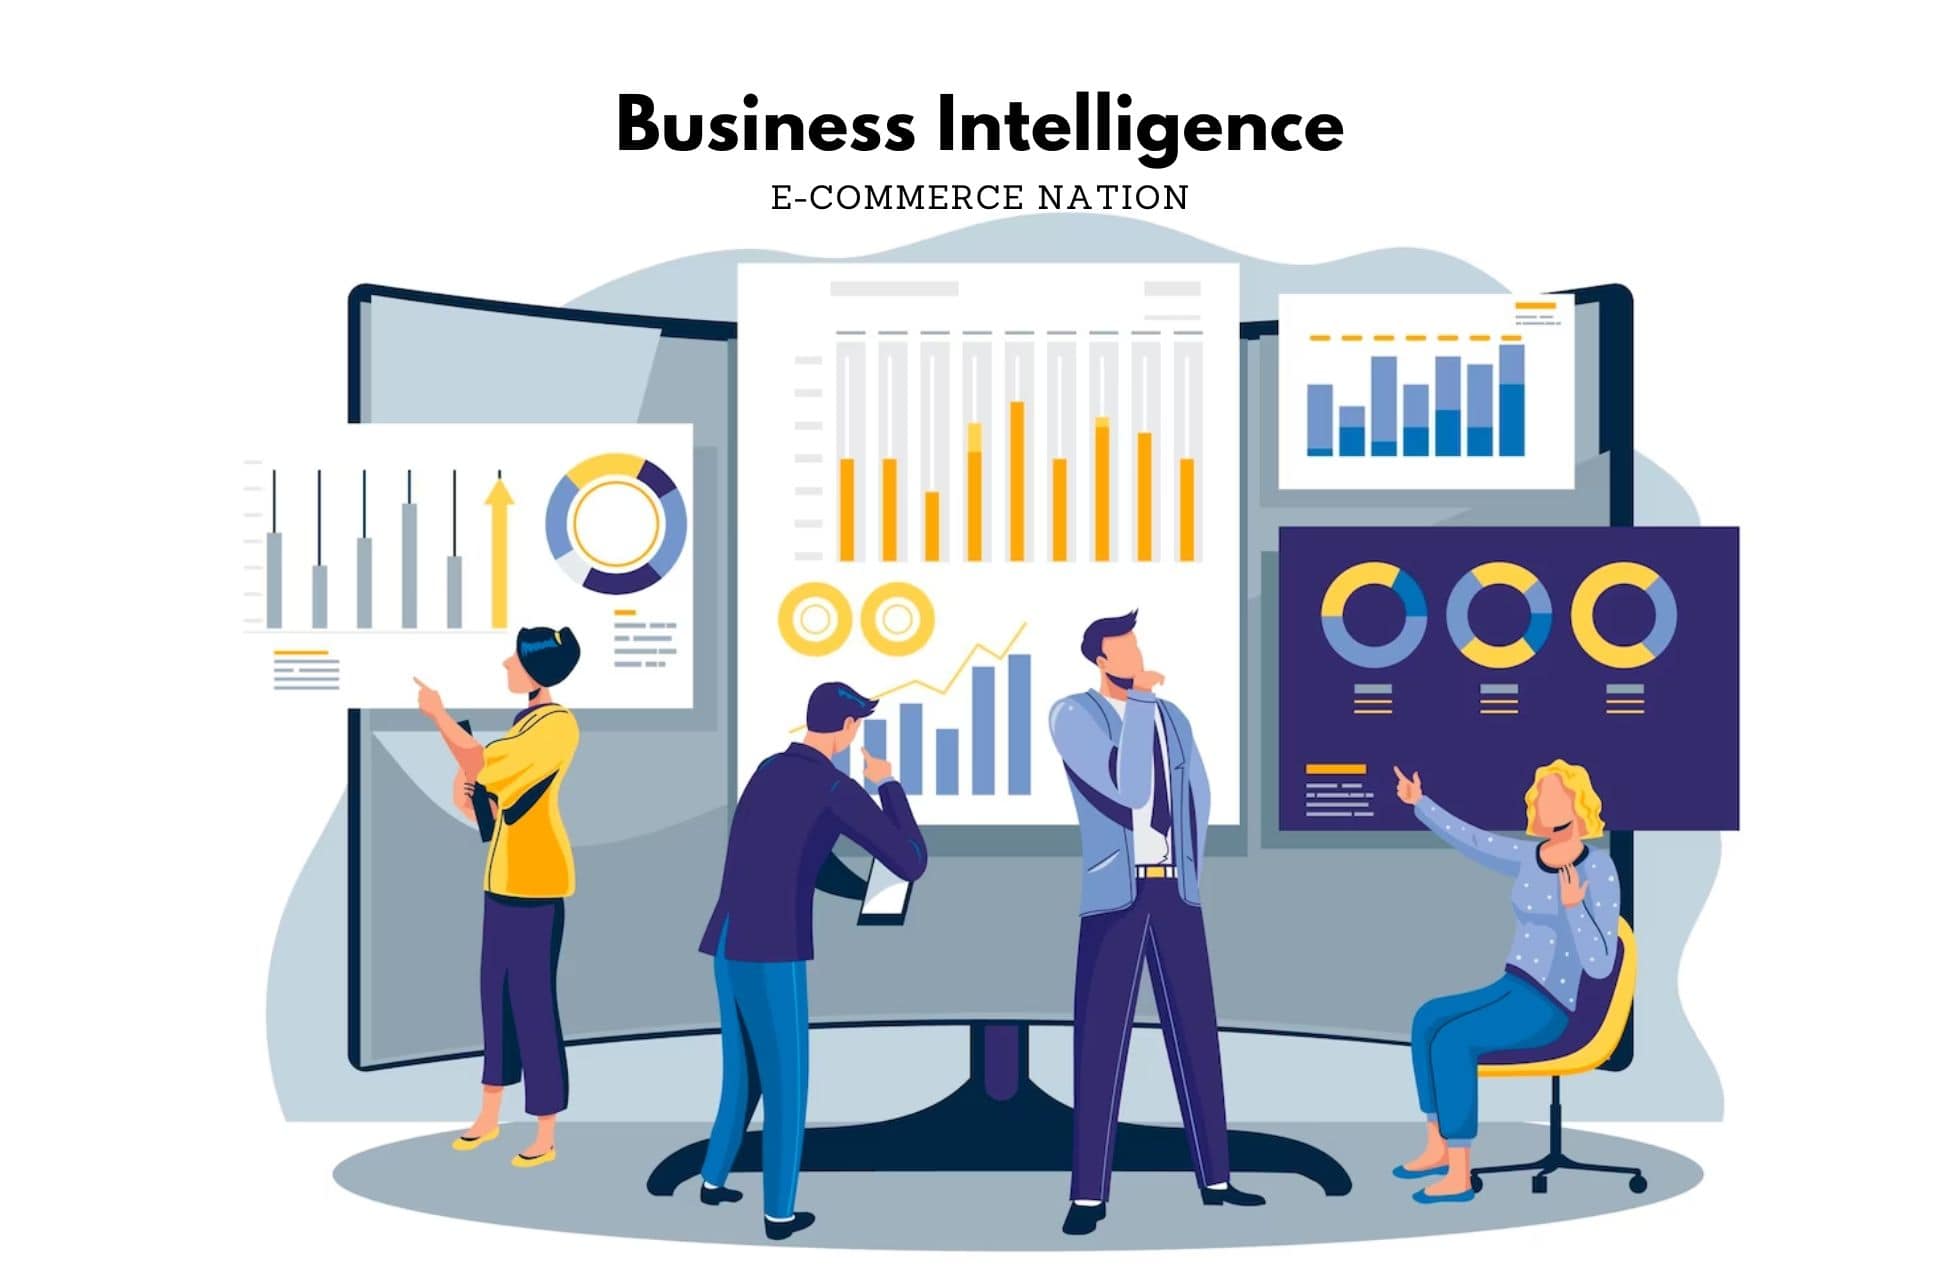 Business Intelligence benefits